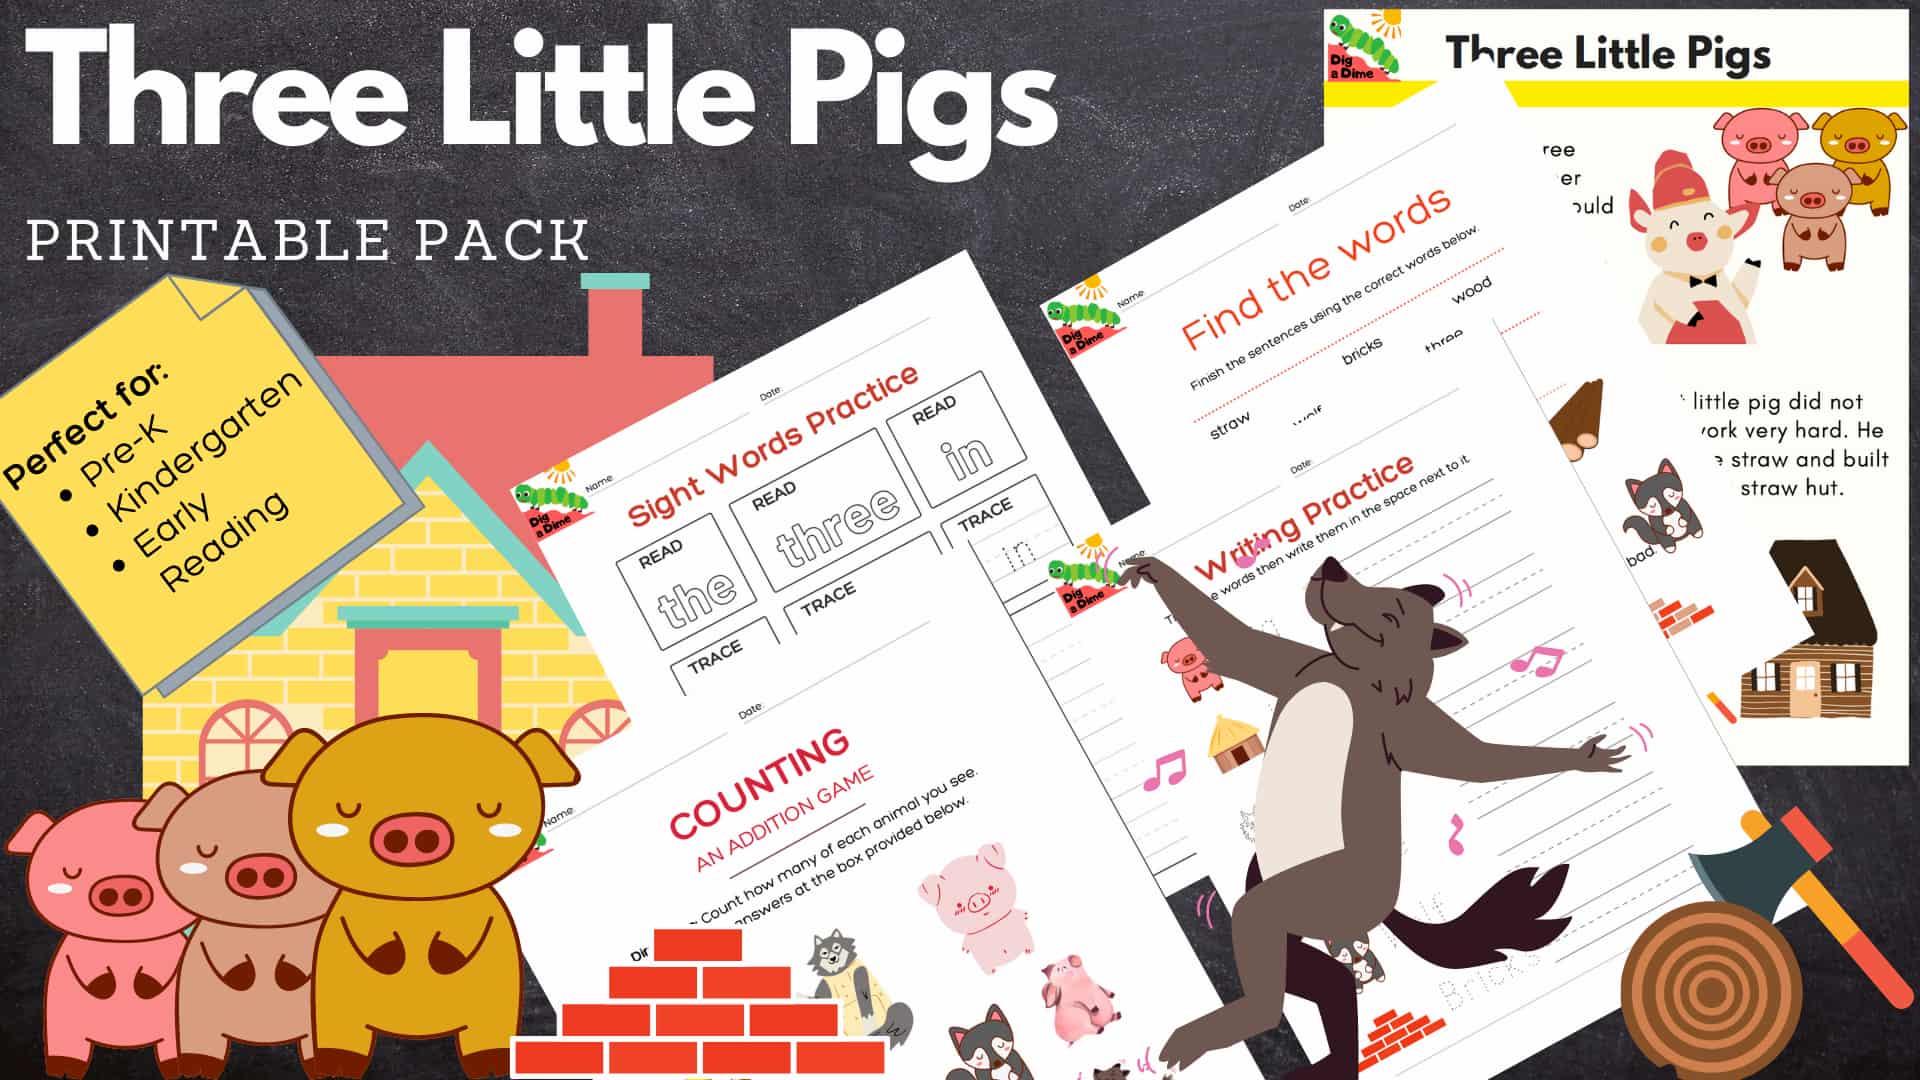 the three little pigs original story pdf